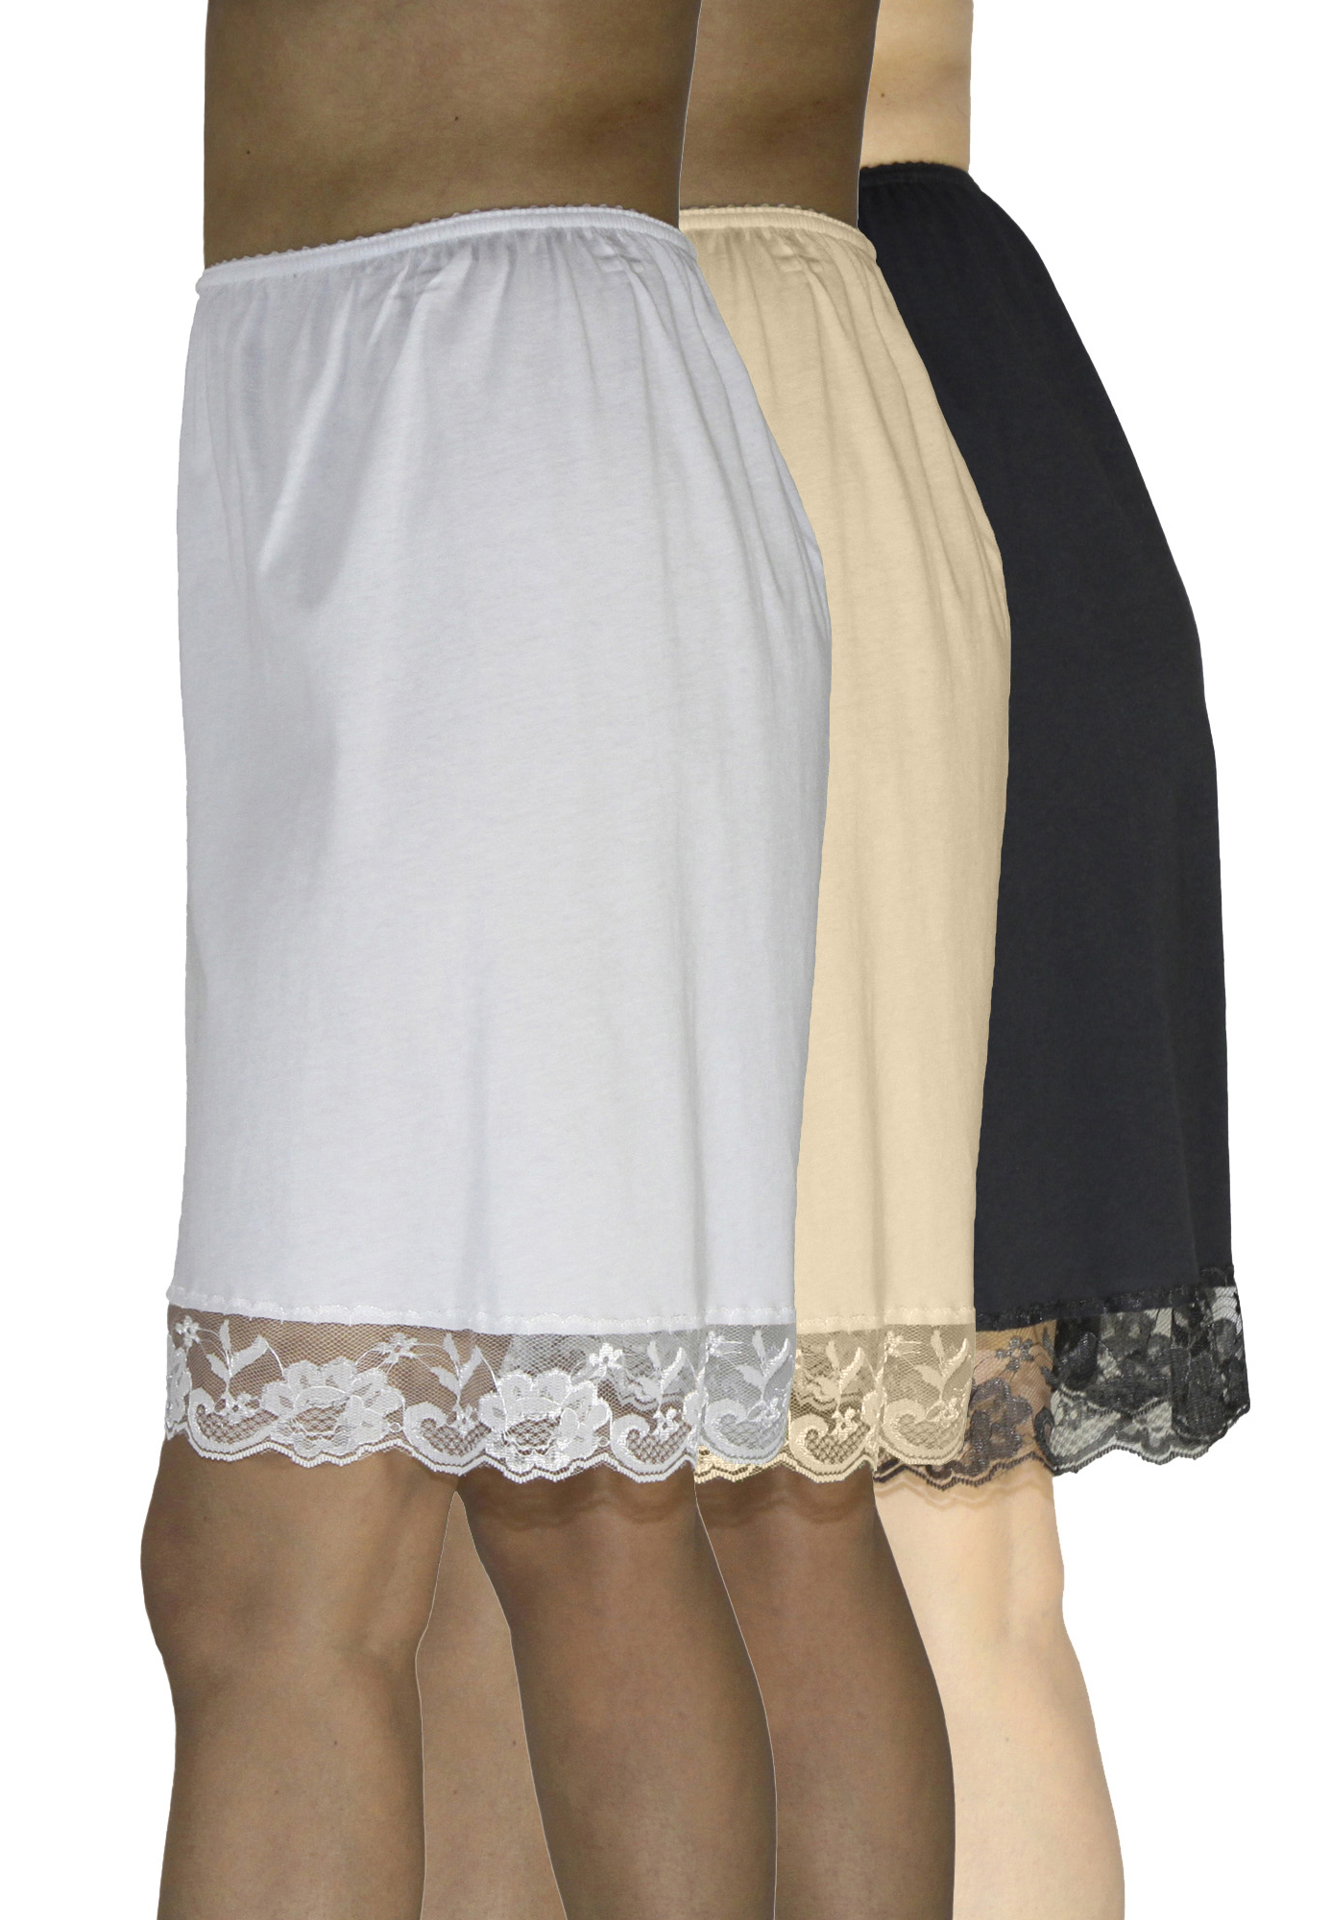 Underworks Pettipants Cotton Knit Culotte Slip Bloomers Split Skirt 9-inch  Inseam 3-Pack - White-Beige-Black - S